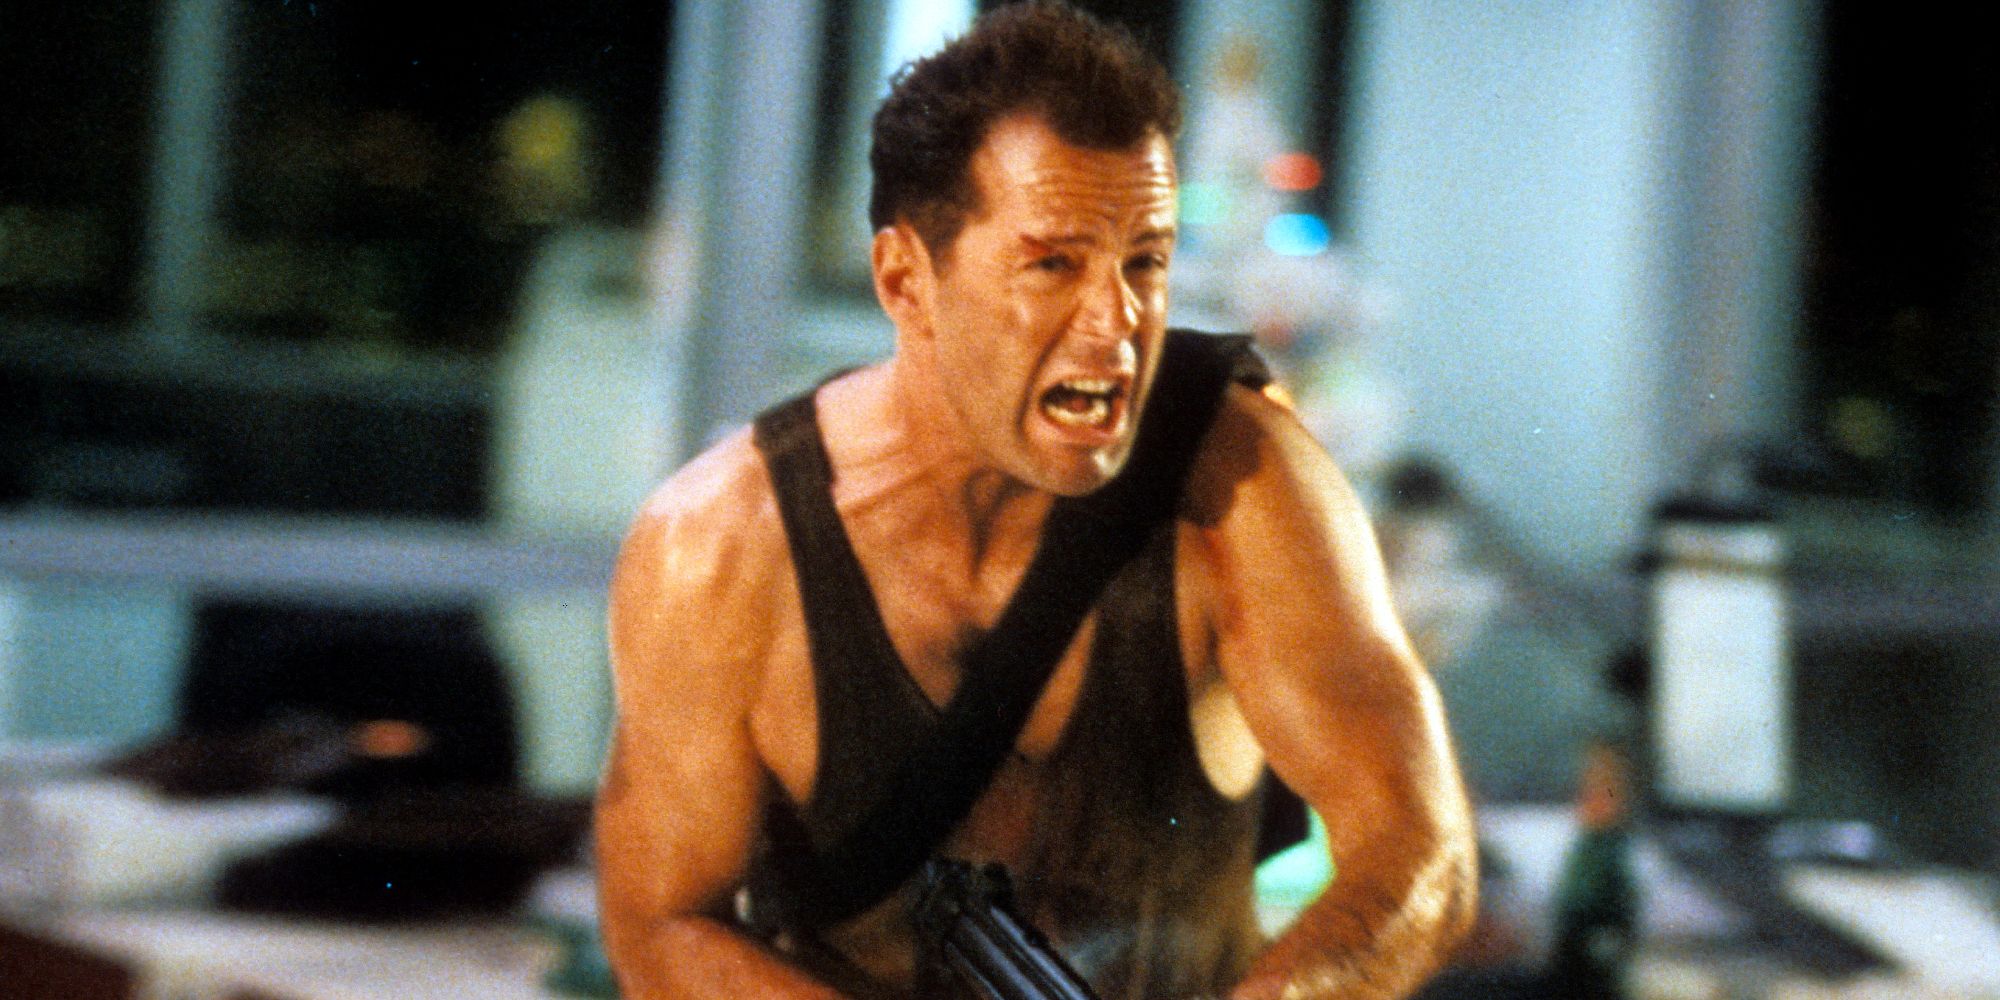 Bruce Willis running through an office with a gun as John McClane in Die Hard